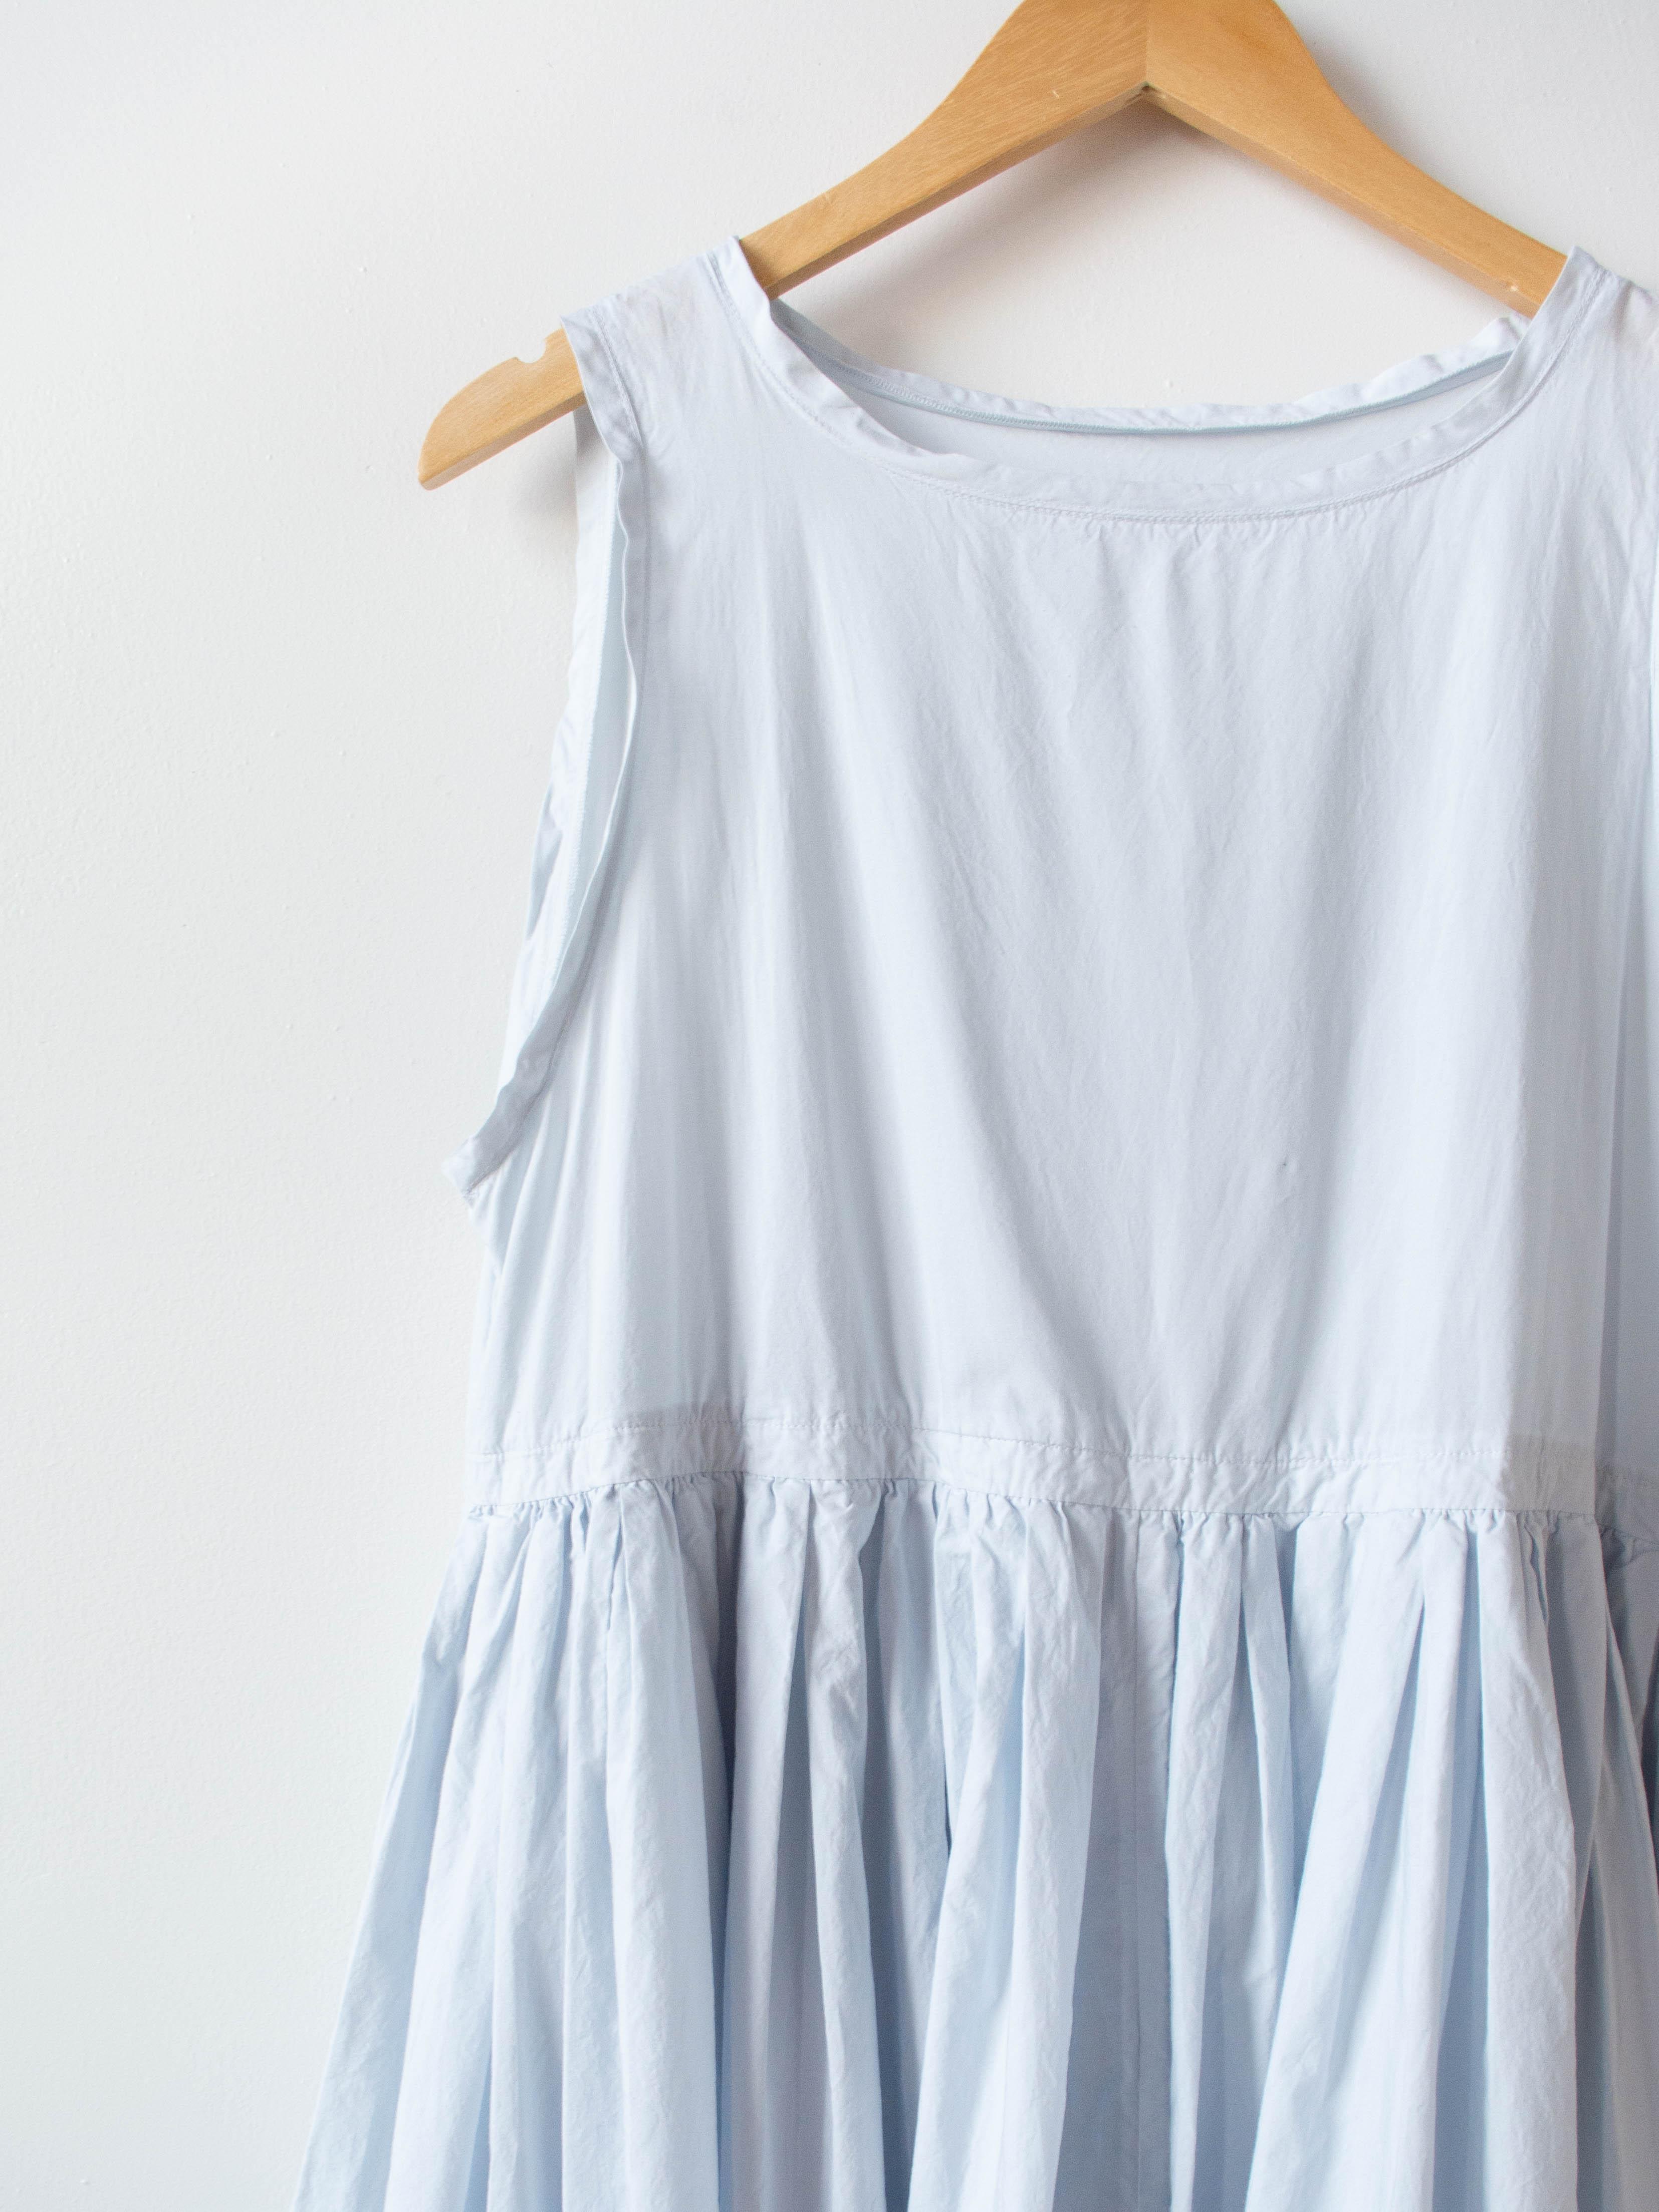 Namu Shop - Veritecoeur Sleeveless Gather Dress - Light Blue Gray